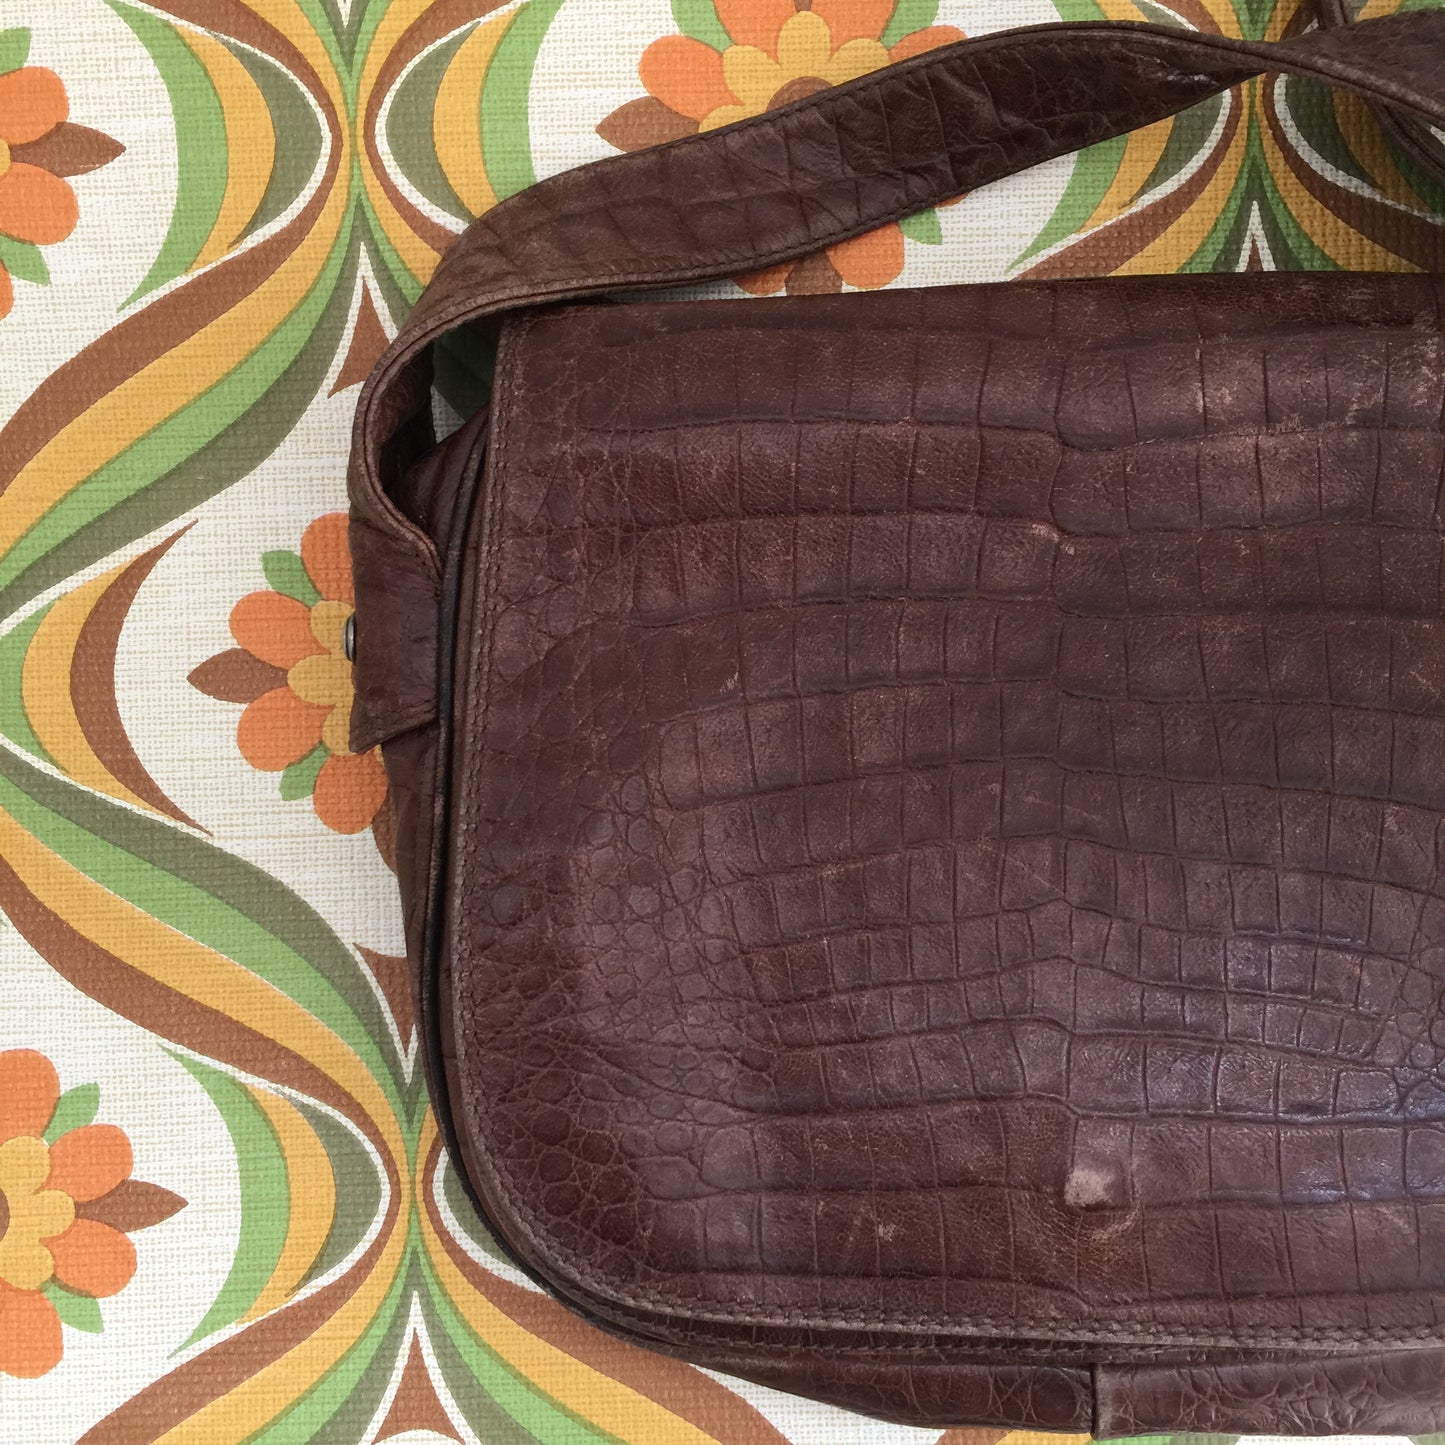 Made in ITALY Handbag Genuine LEATHER Rustic Bag